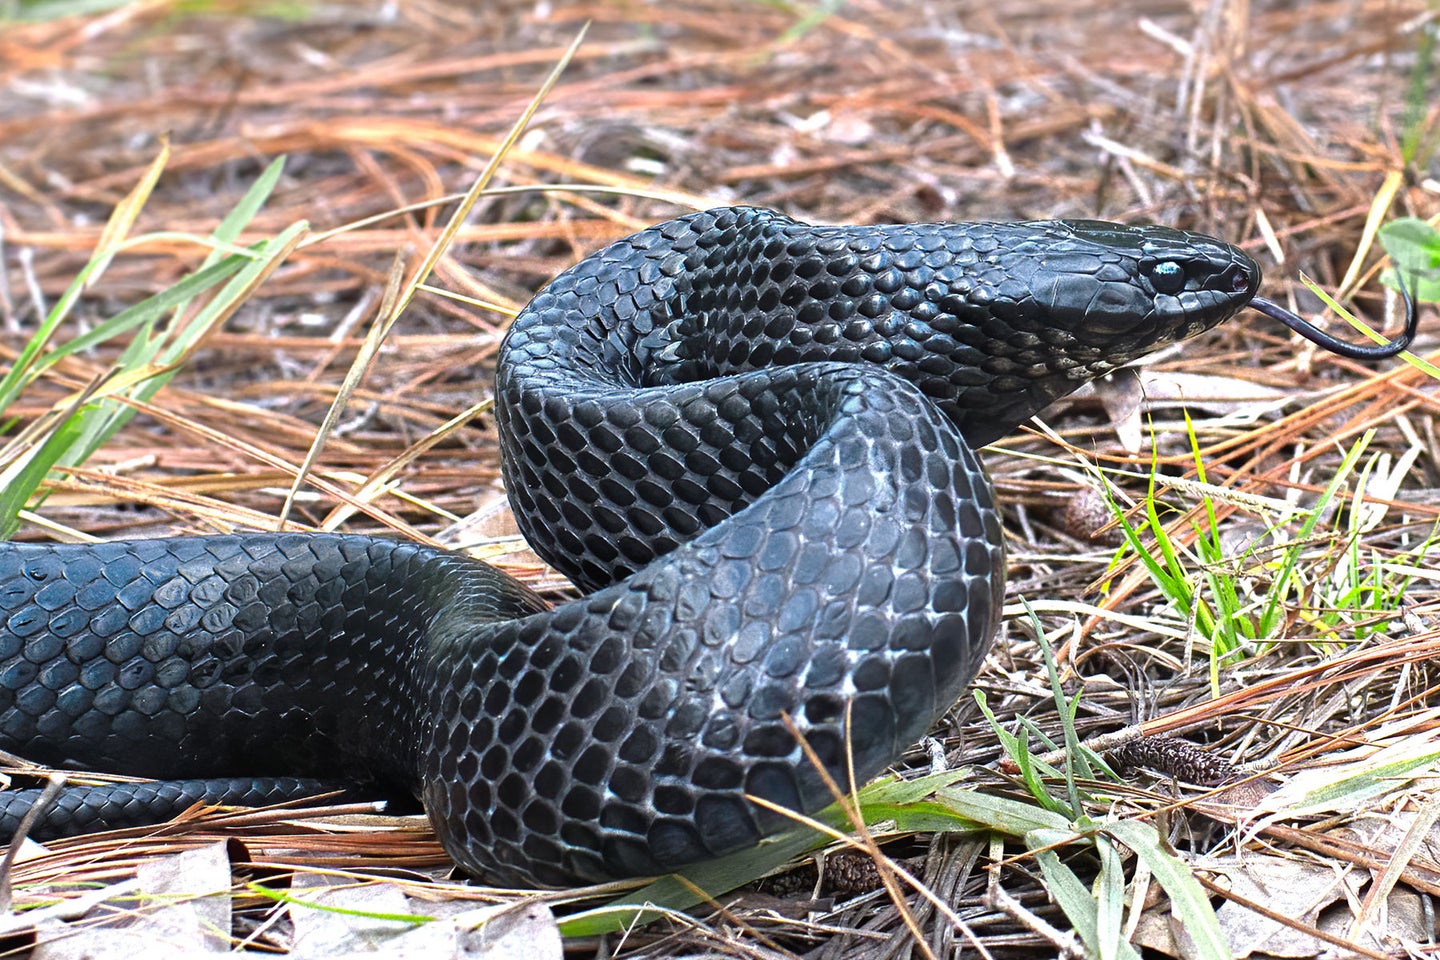 An eastern indigo snake slithers through long leaf pine needles.